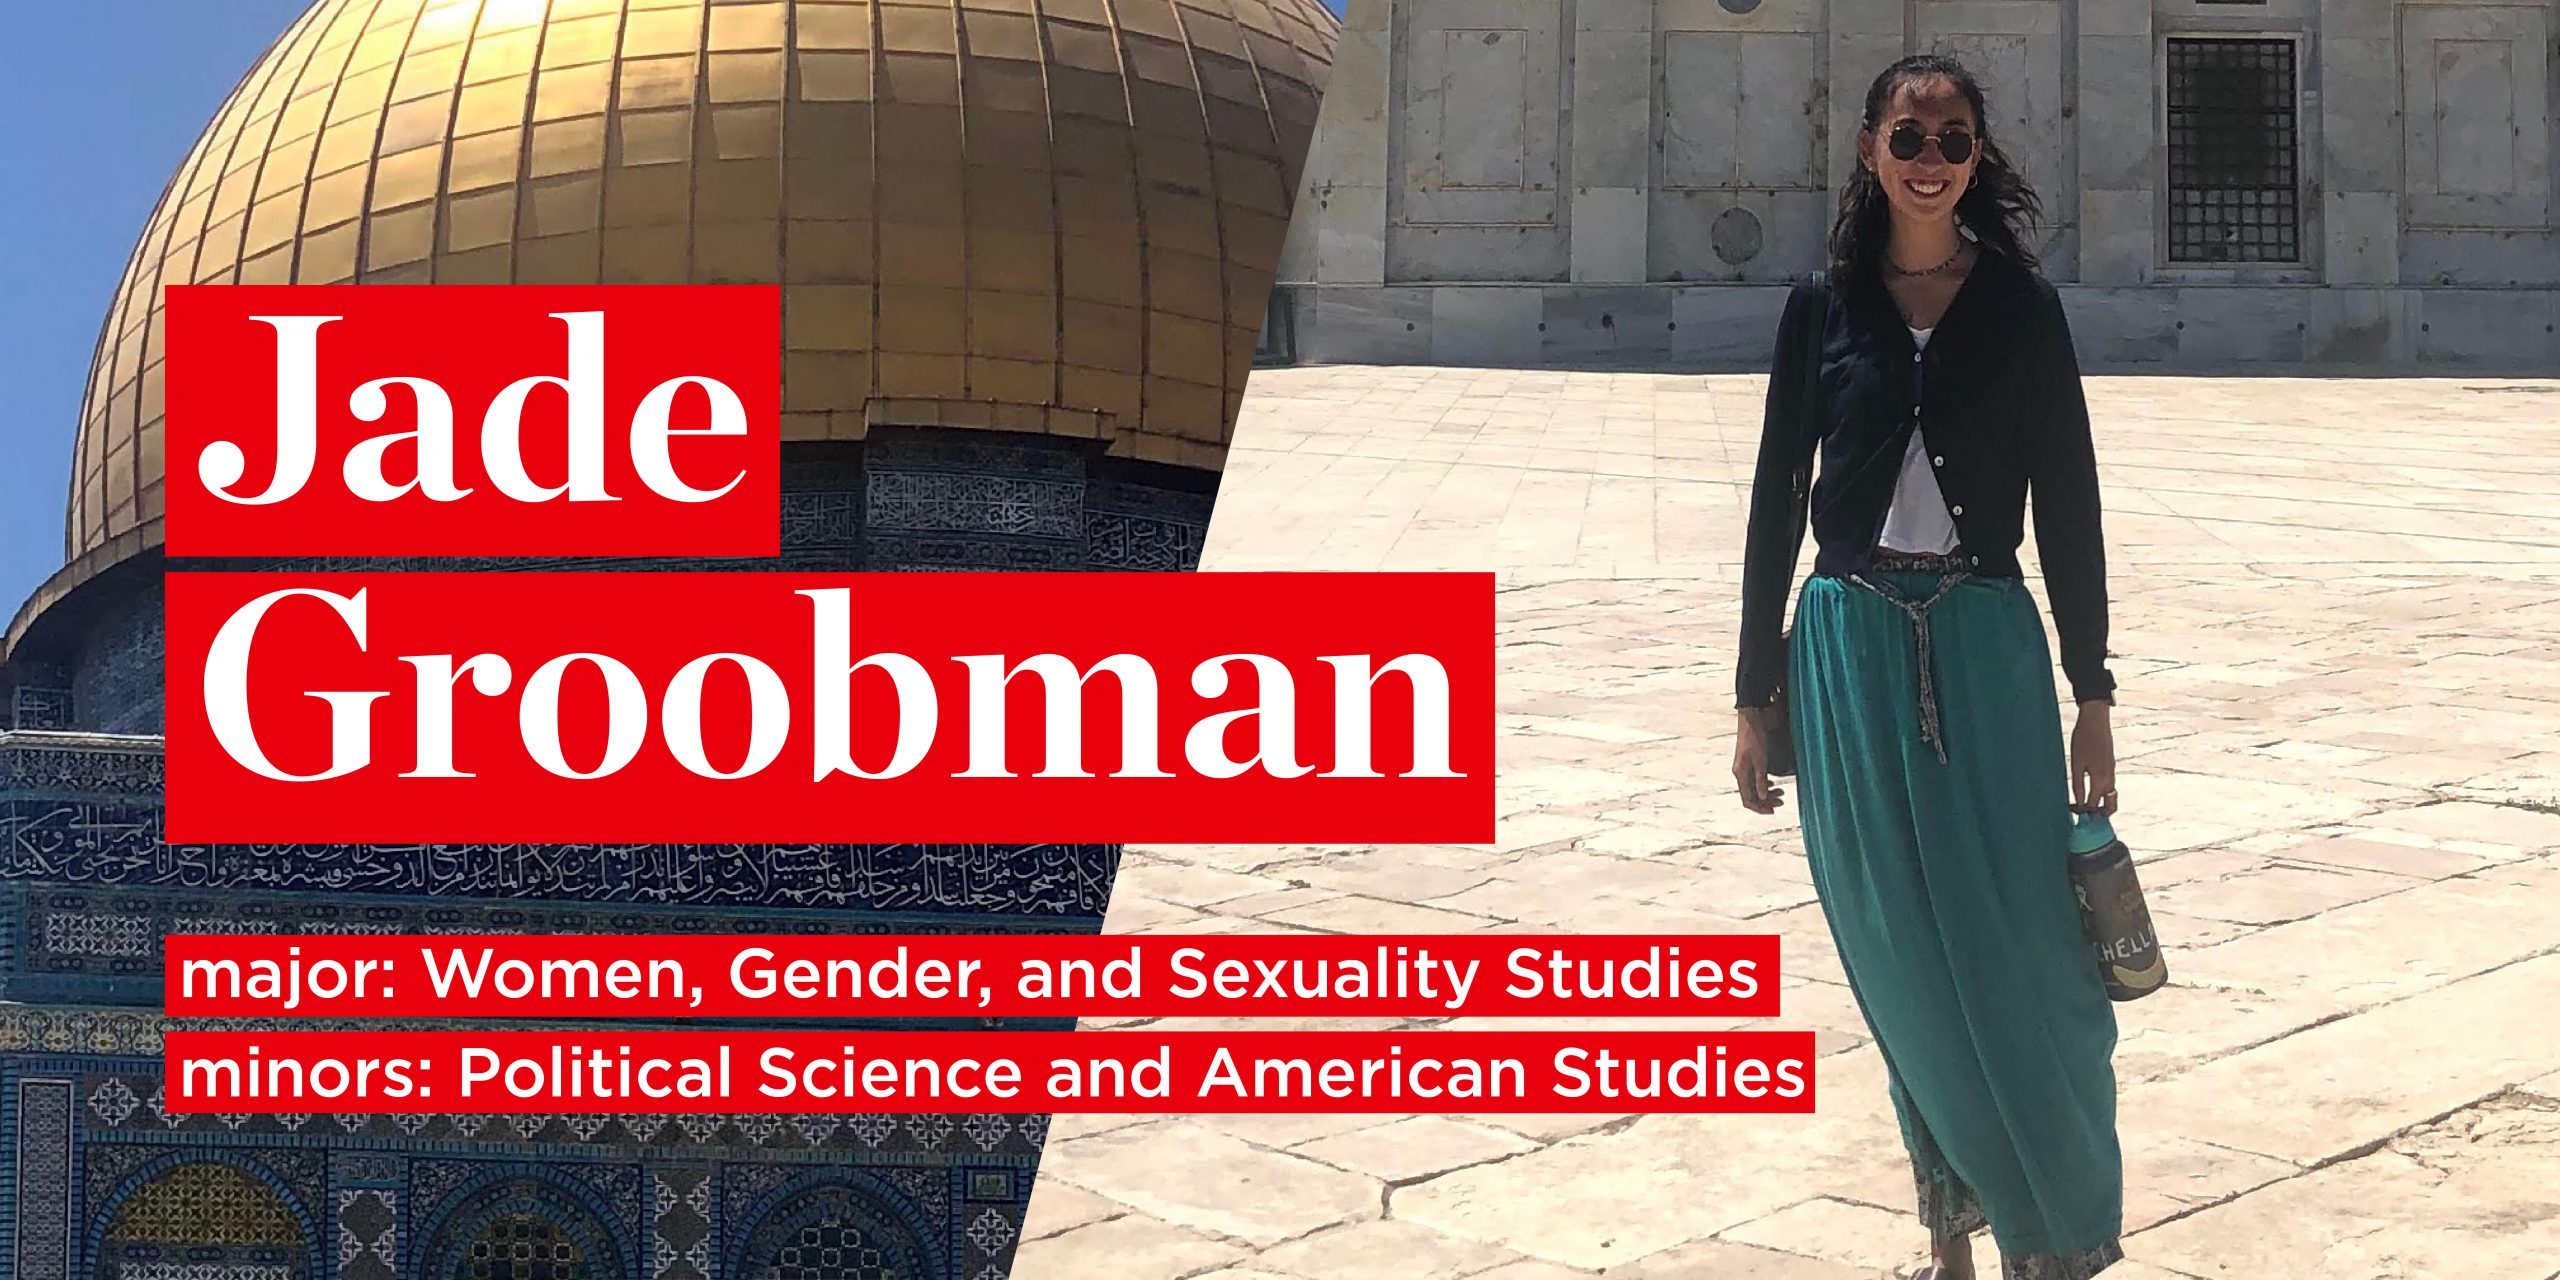 Jade Groobman
major: Women, Gender, and Sexuality Studies
minors: Political Science and American Studies